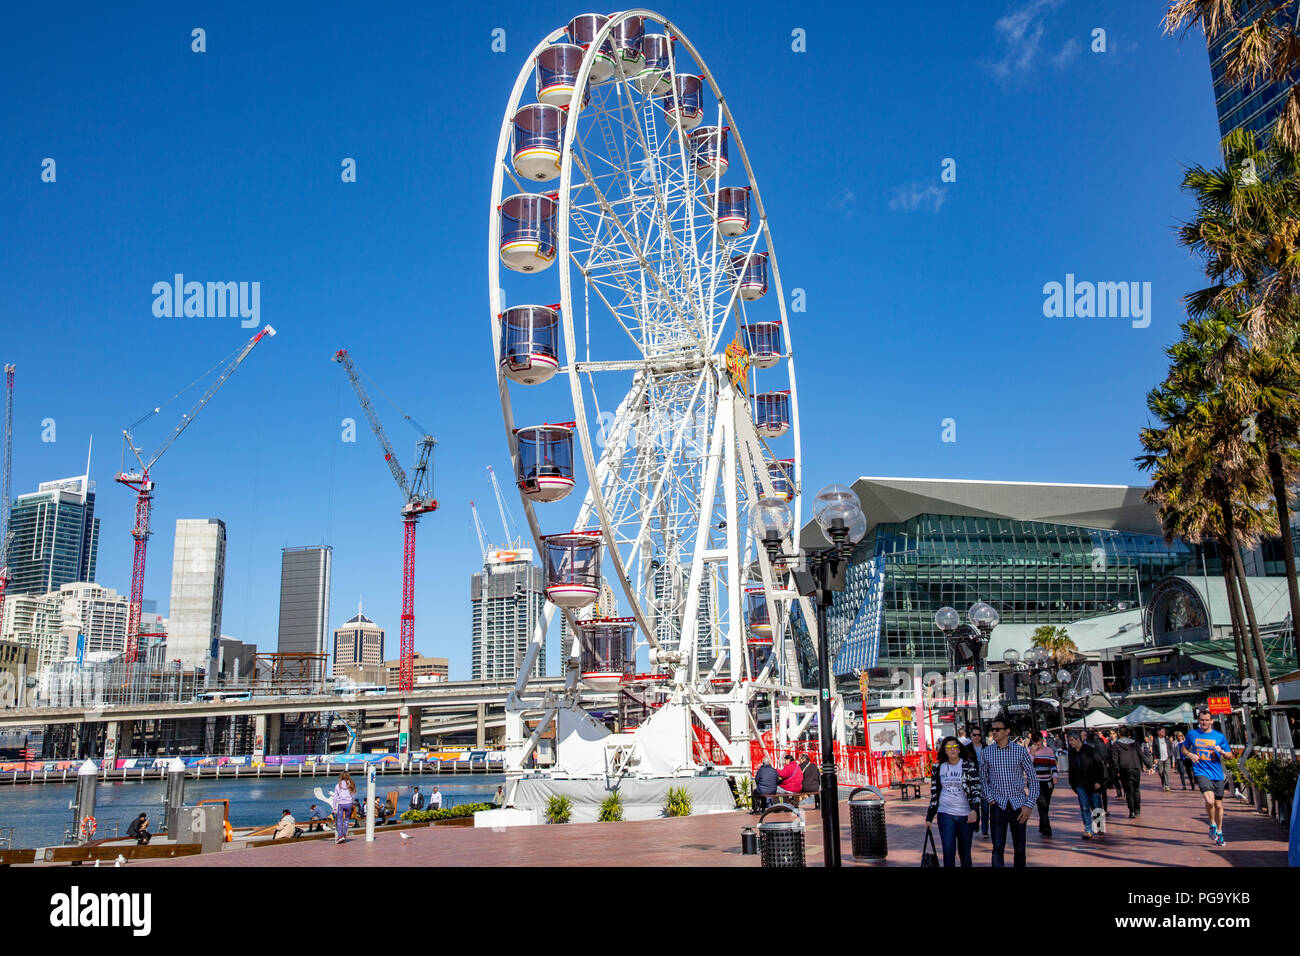 Giant ferris wheel in Darling Harbour,Sydney city centre,Australia Stock Photo